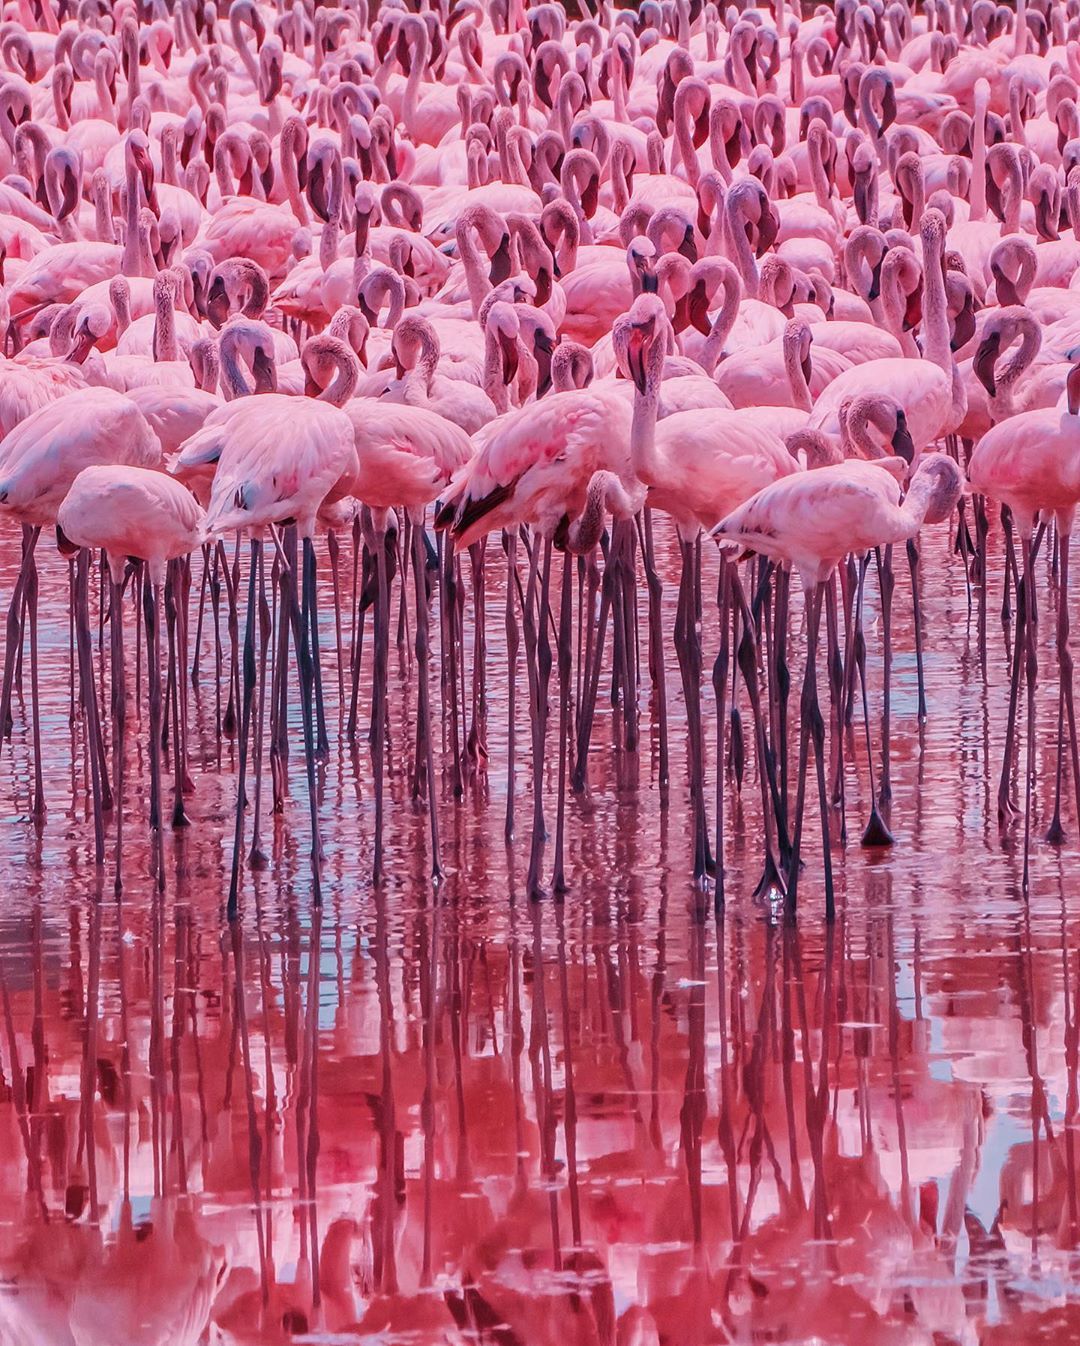 Beautiful 4K Ultra HD Flamingo Wallpaper Background for iPhone